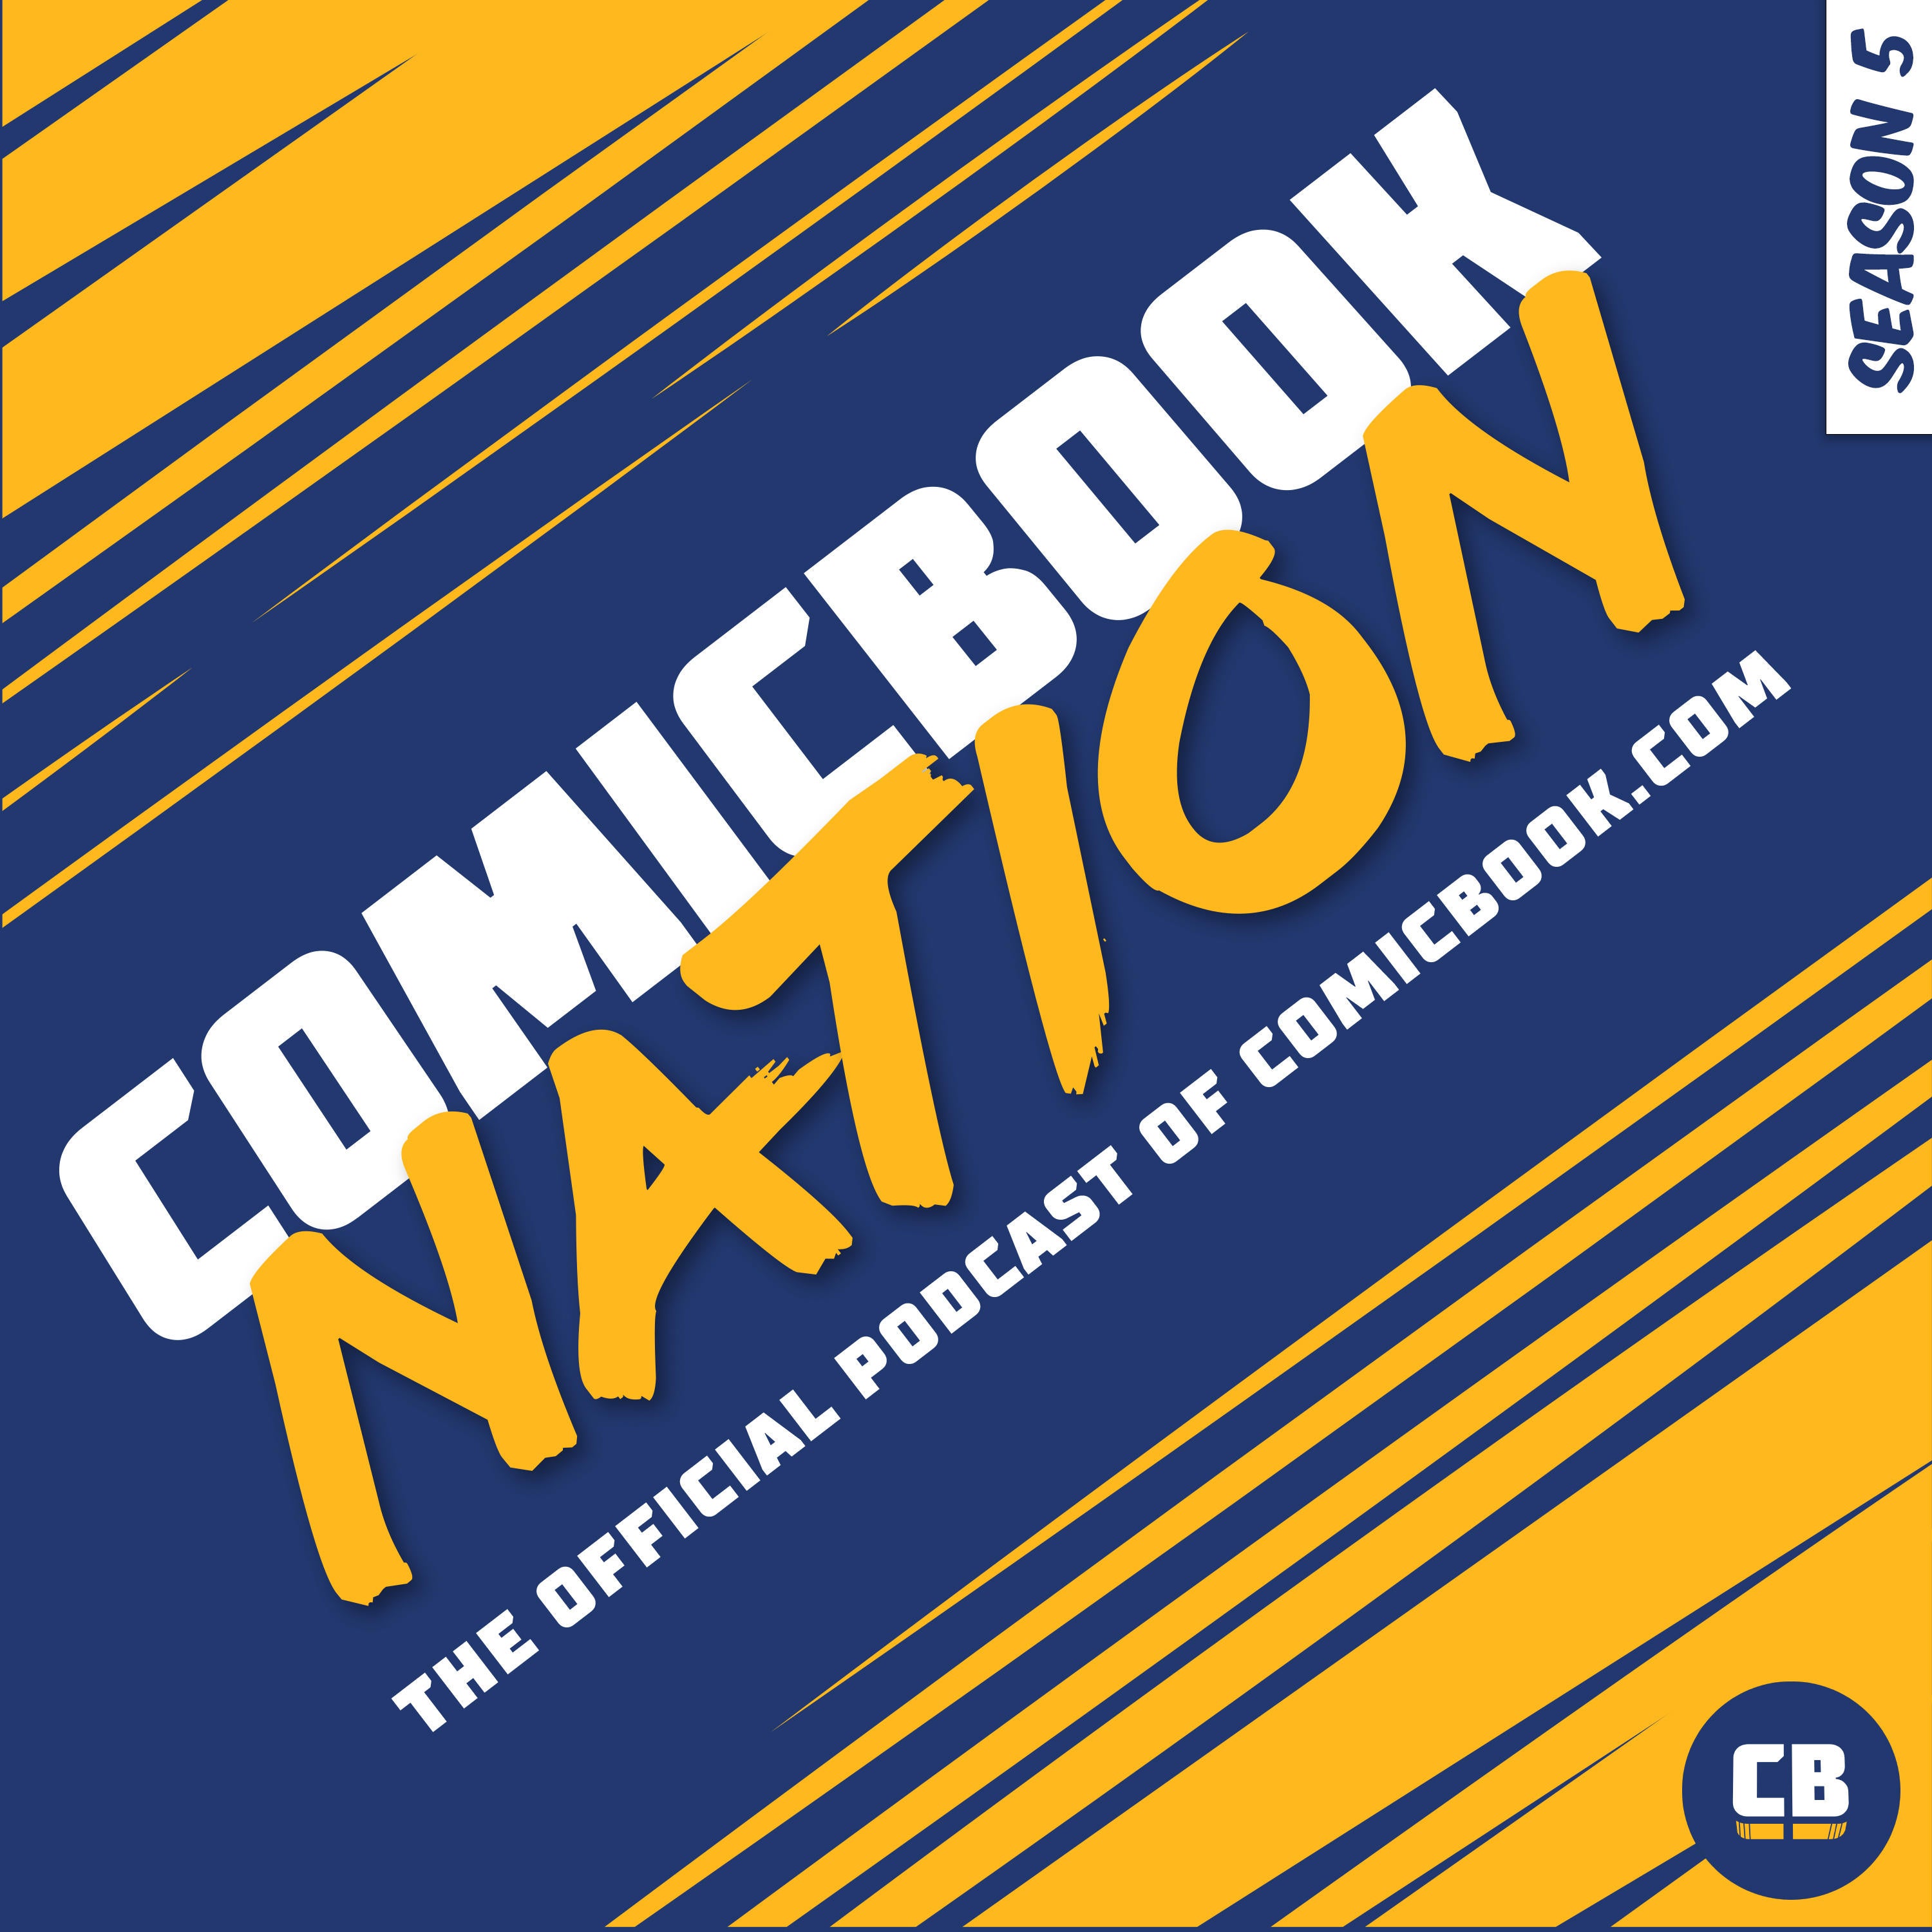 comicbook-nation-podcast-show-season-5-logo.jpg